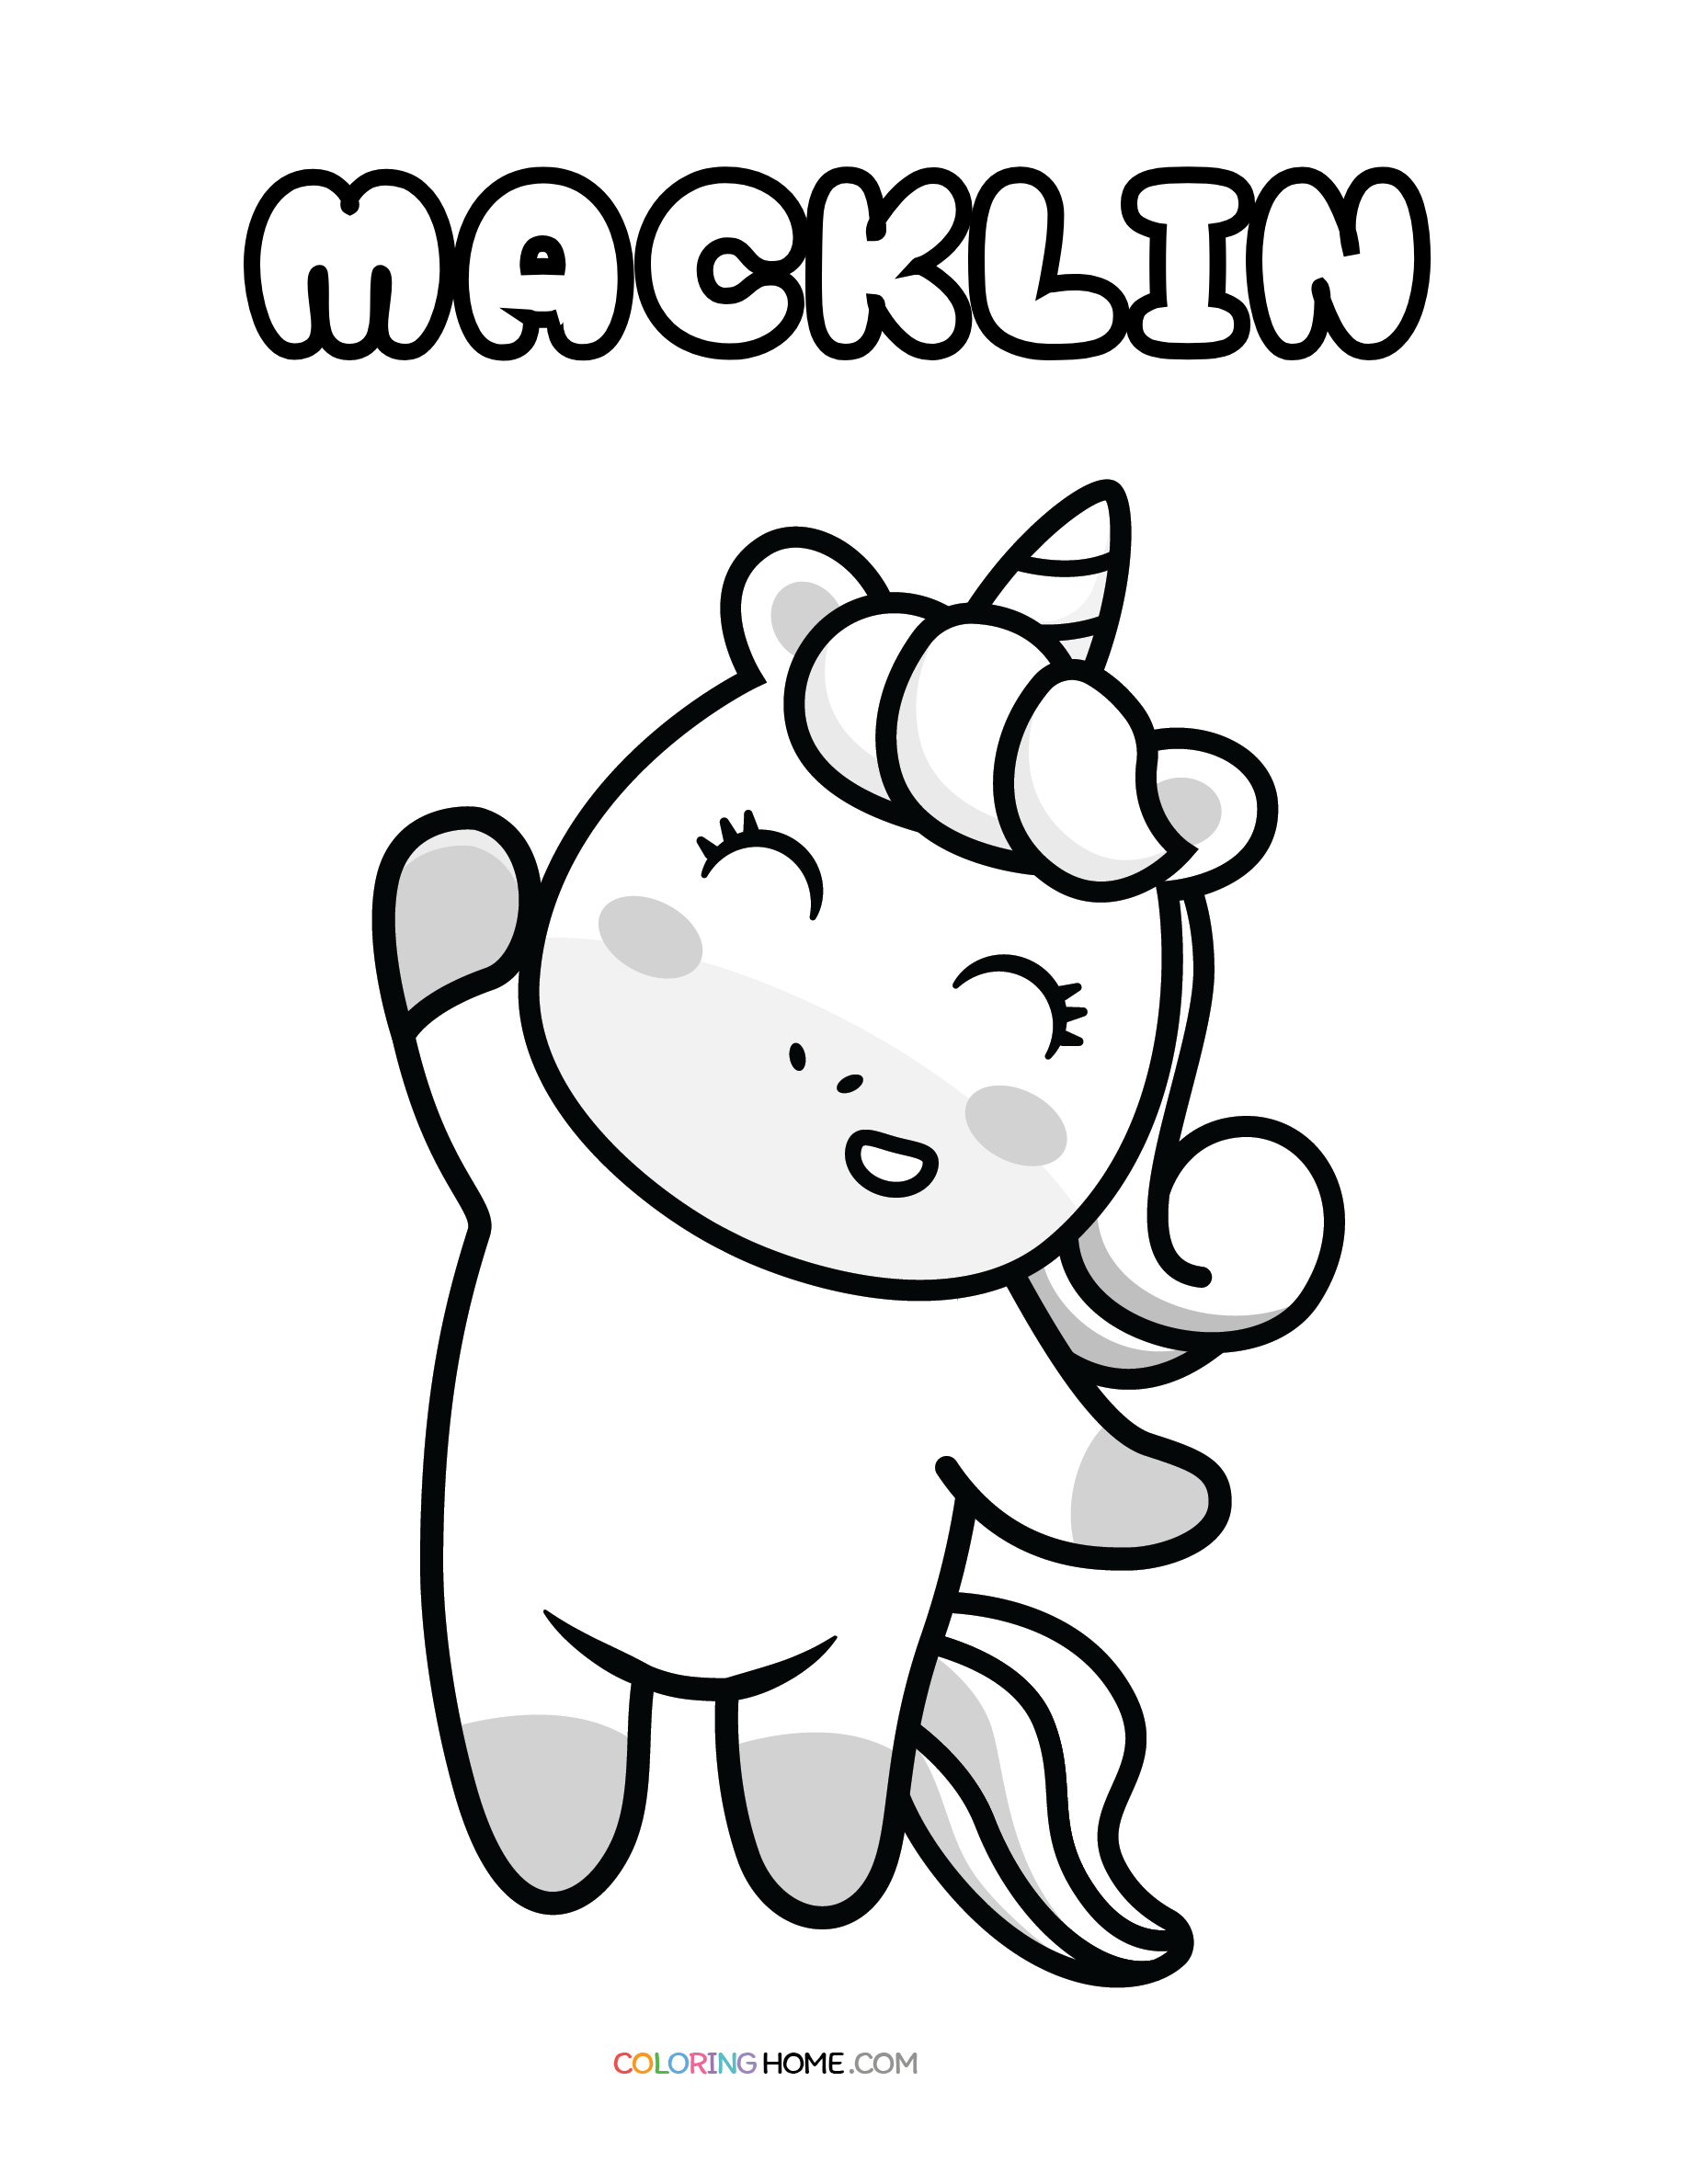 Macklin unicorn coloring page